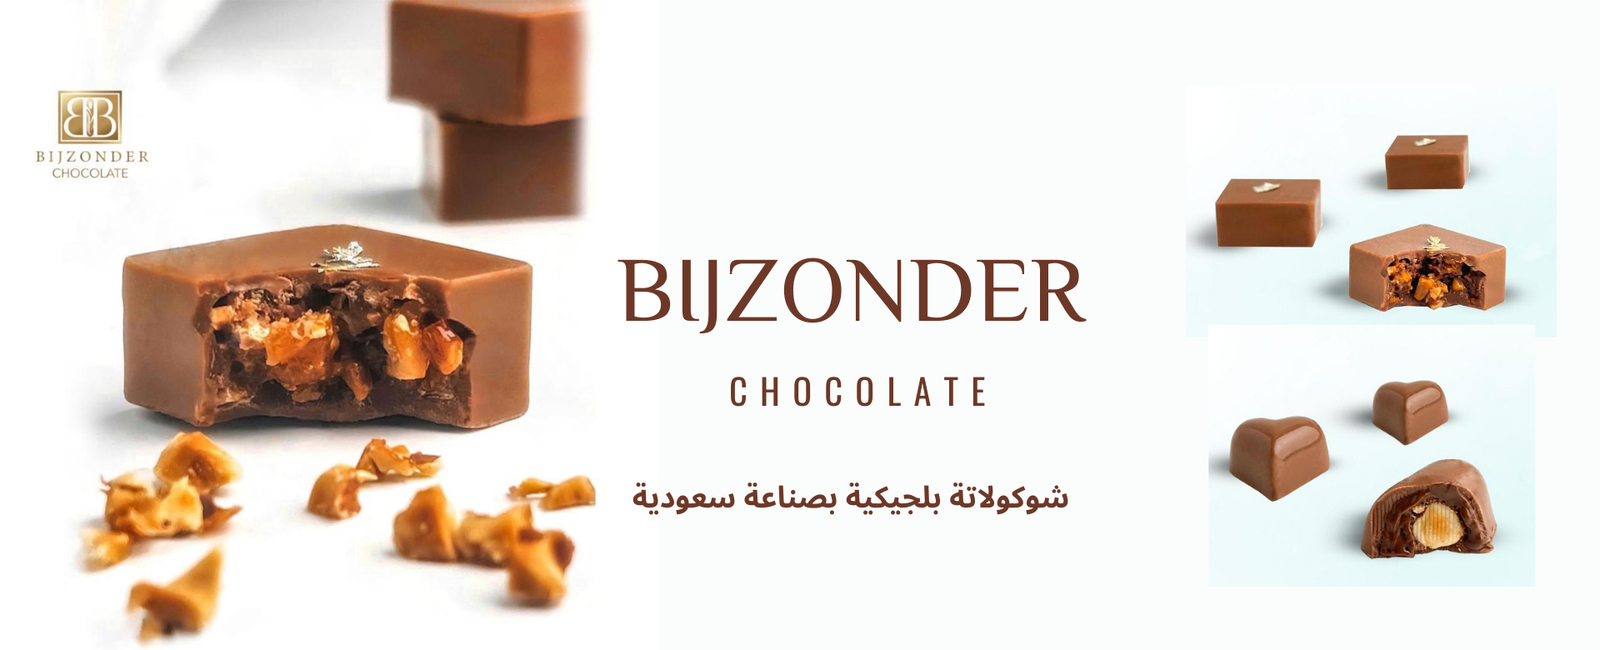 Bijzonder Chocolate | شوكلاتة بيزندر